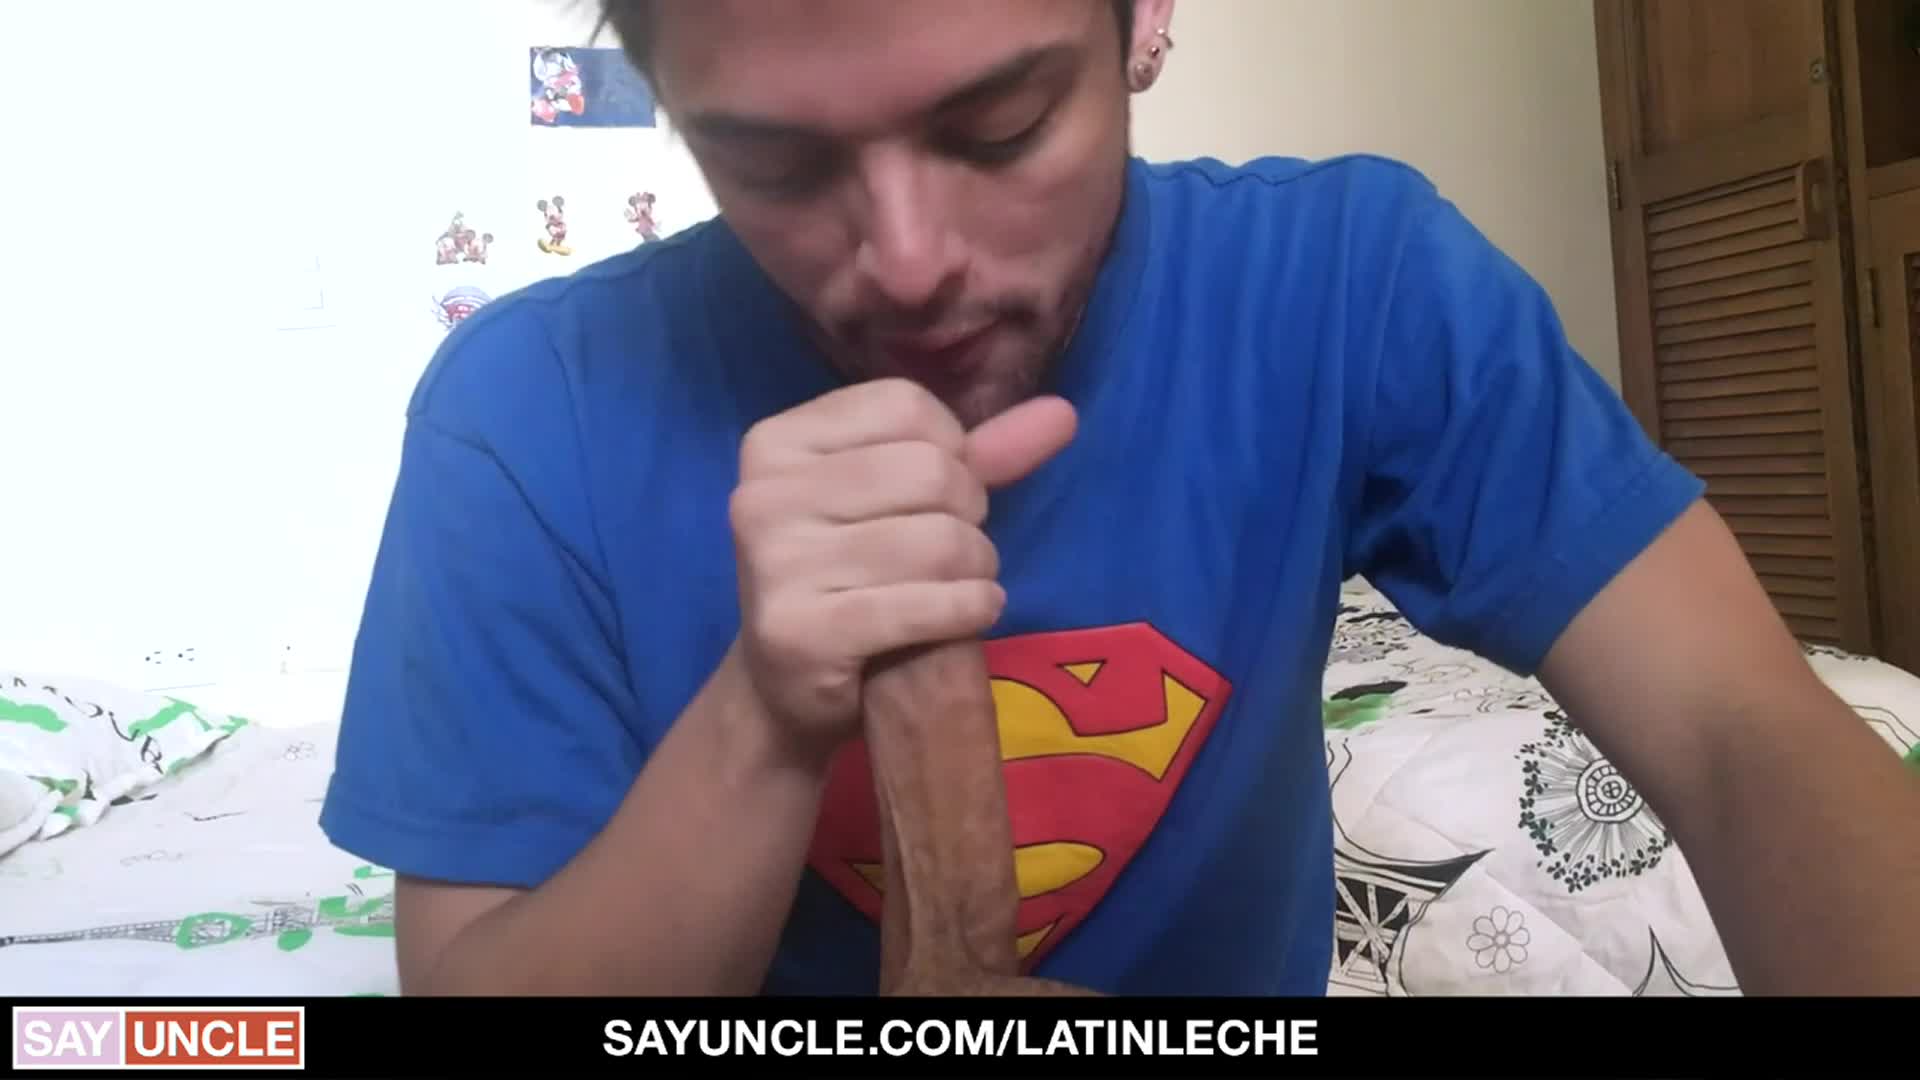 The Latin Superman Needs Some Money